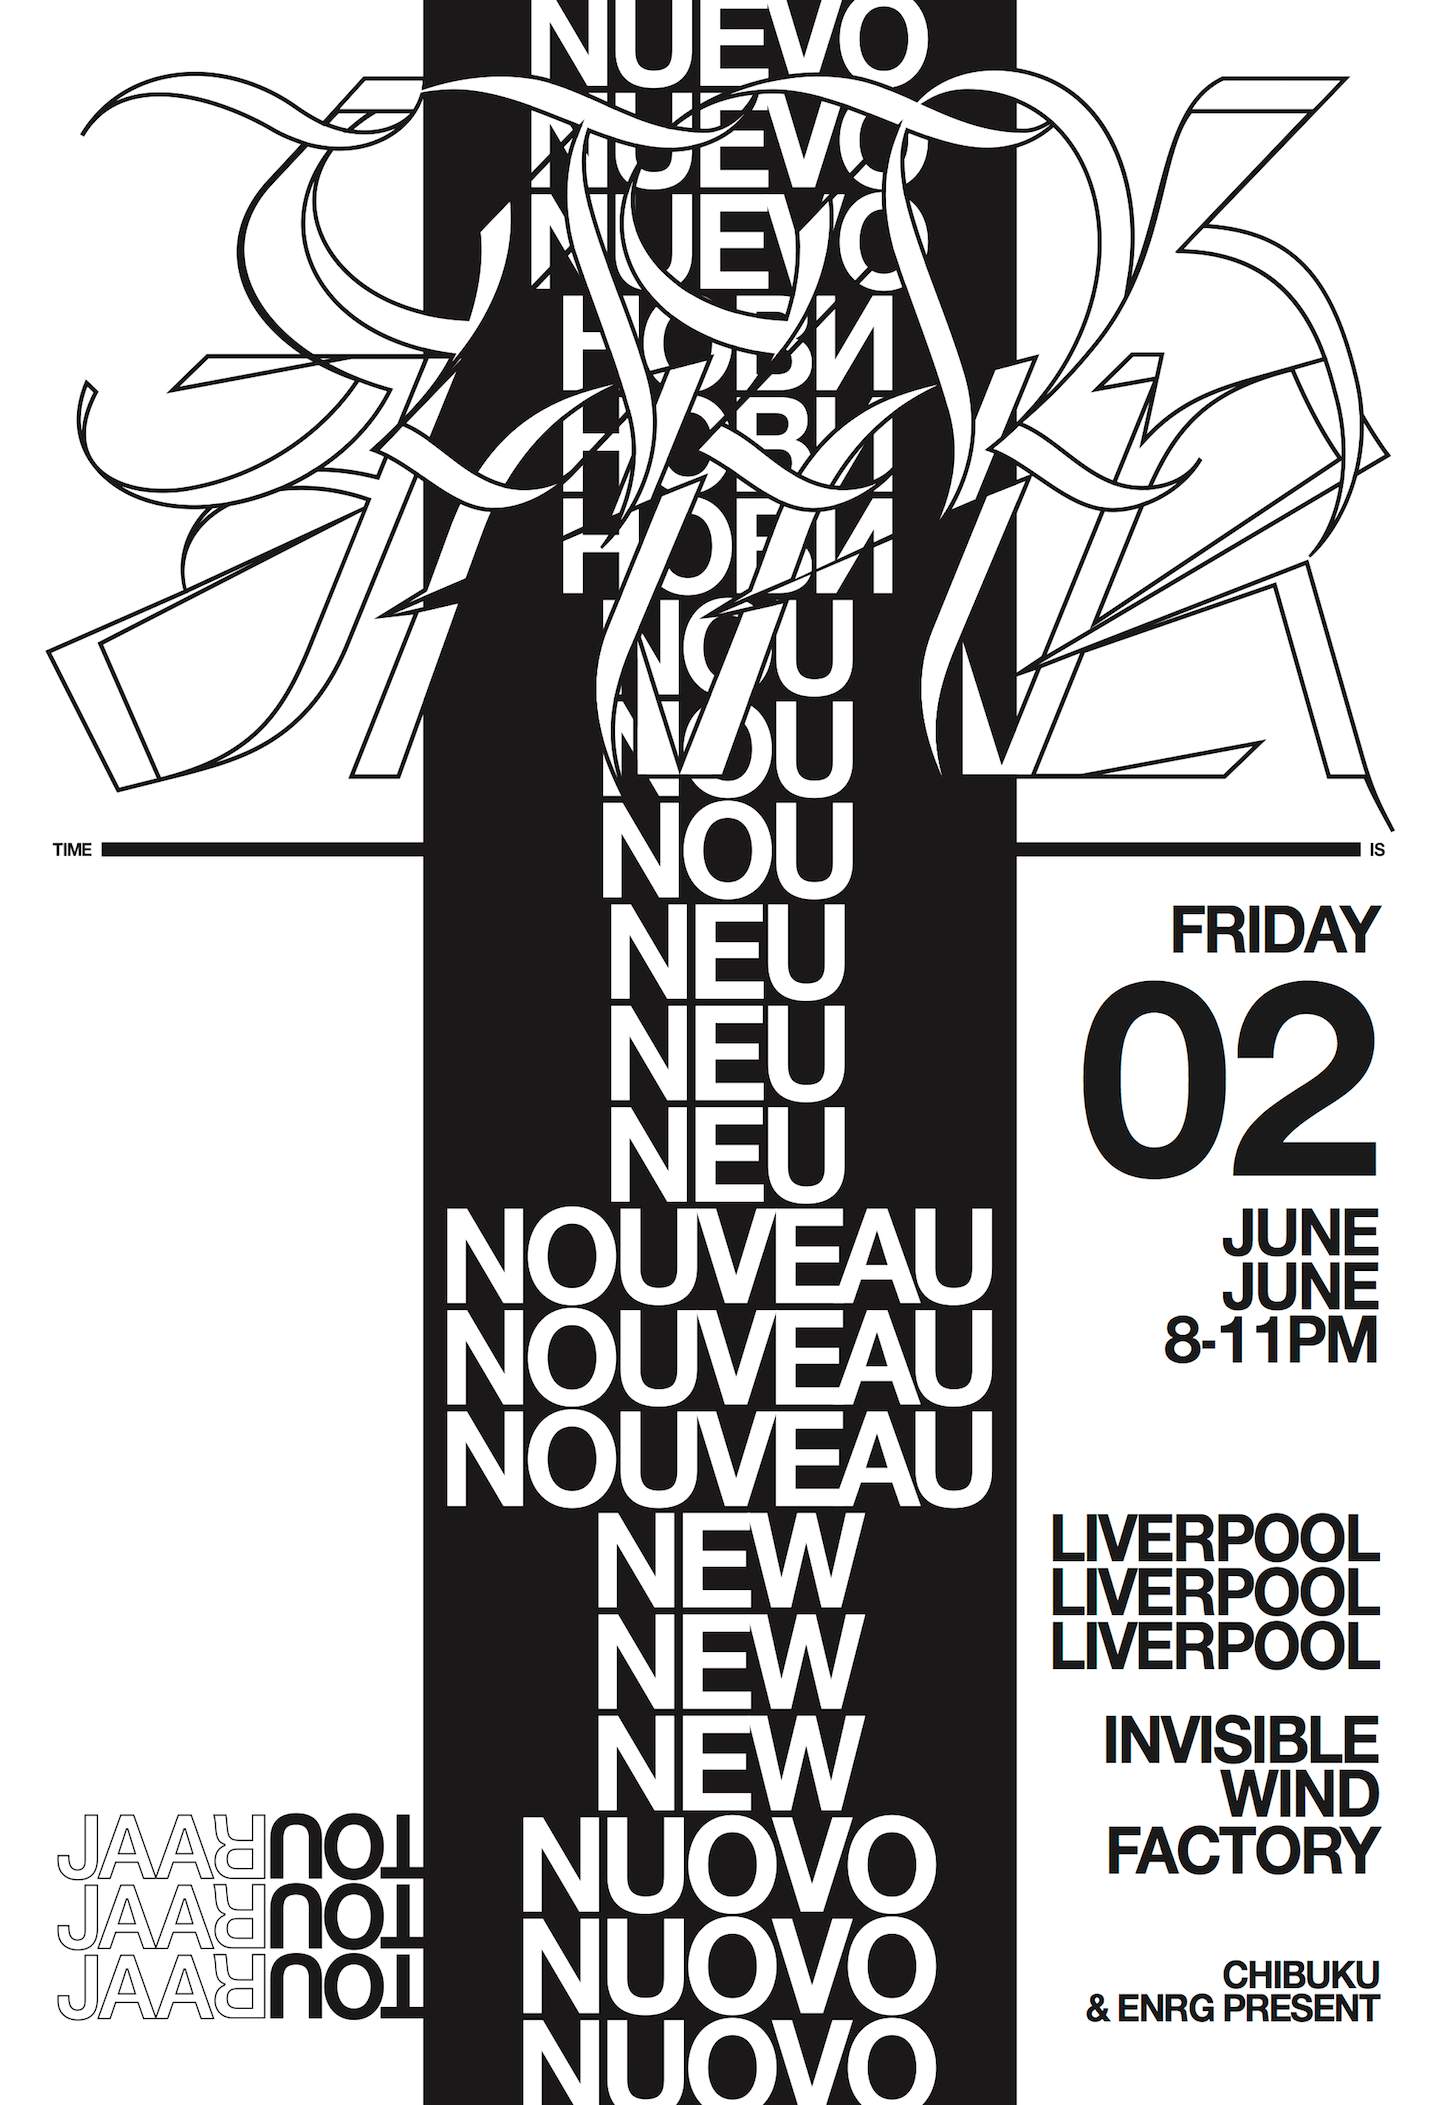 Nicolas Jaar makes live debut in Liverpool image